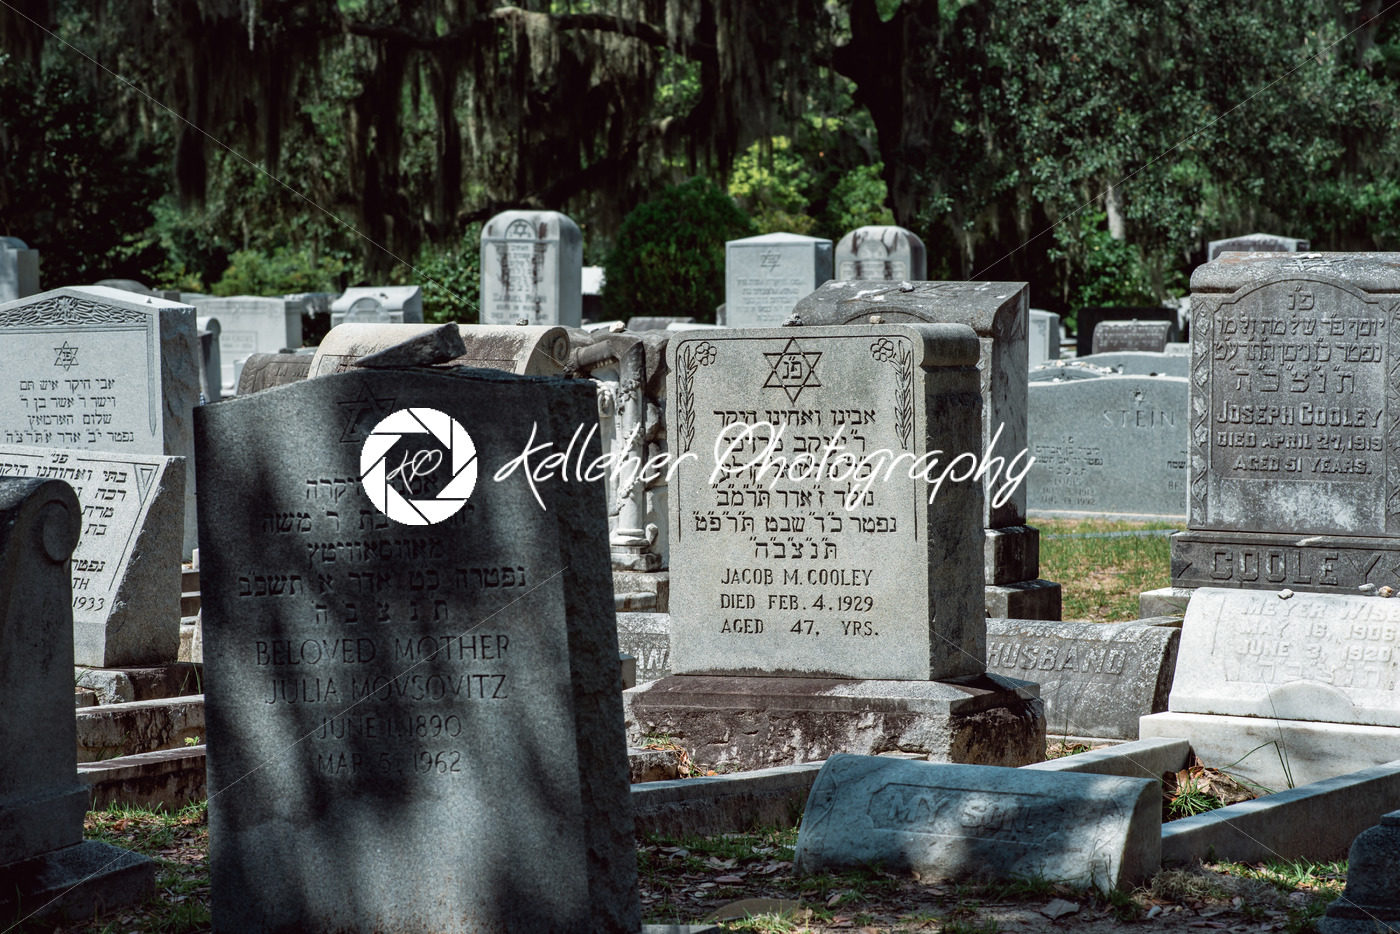 Jewish Cemetery Statuary Statue Bonaventure Cemetery Savannah Georgia - Kelleher Photography Store